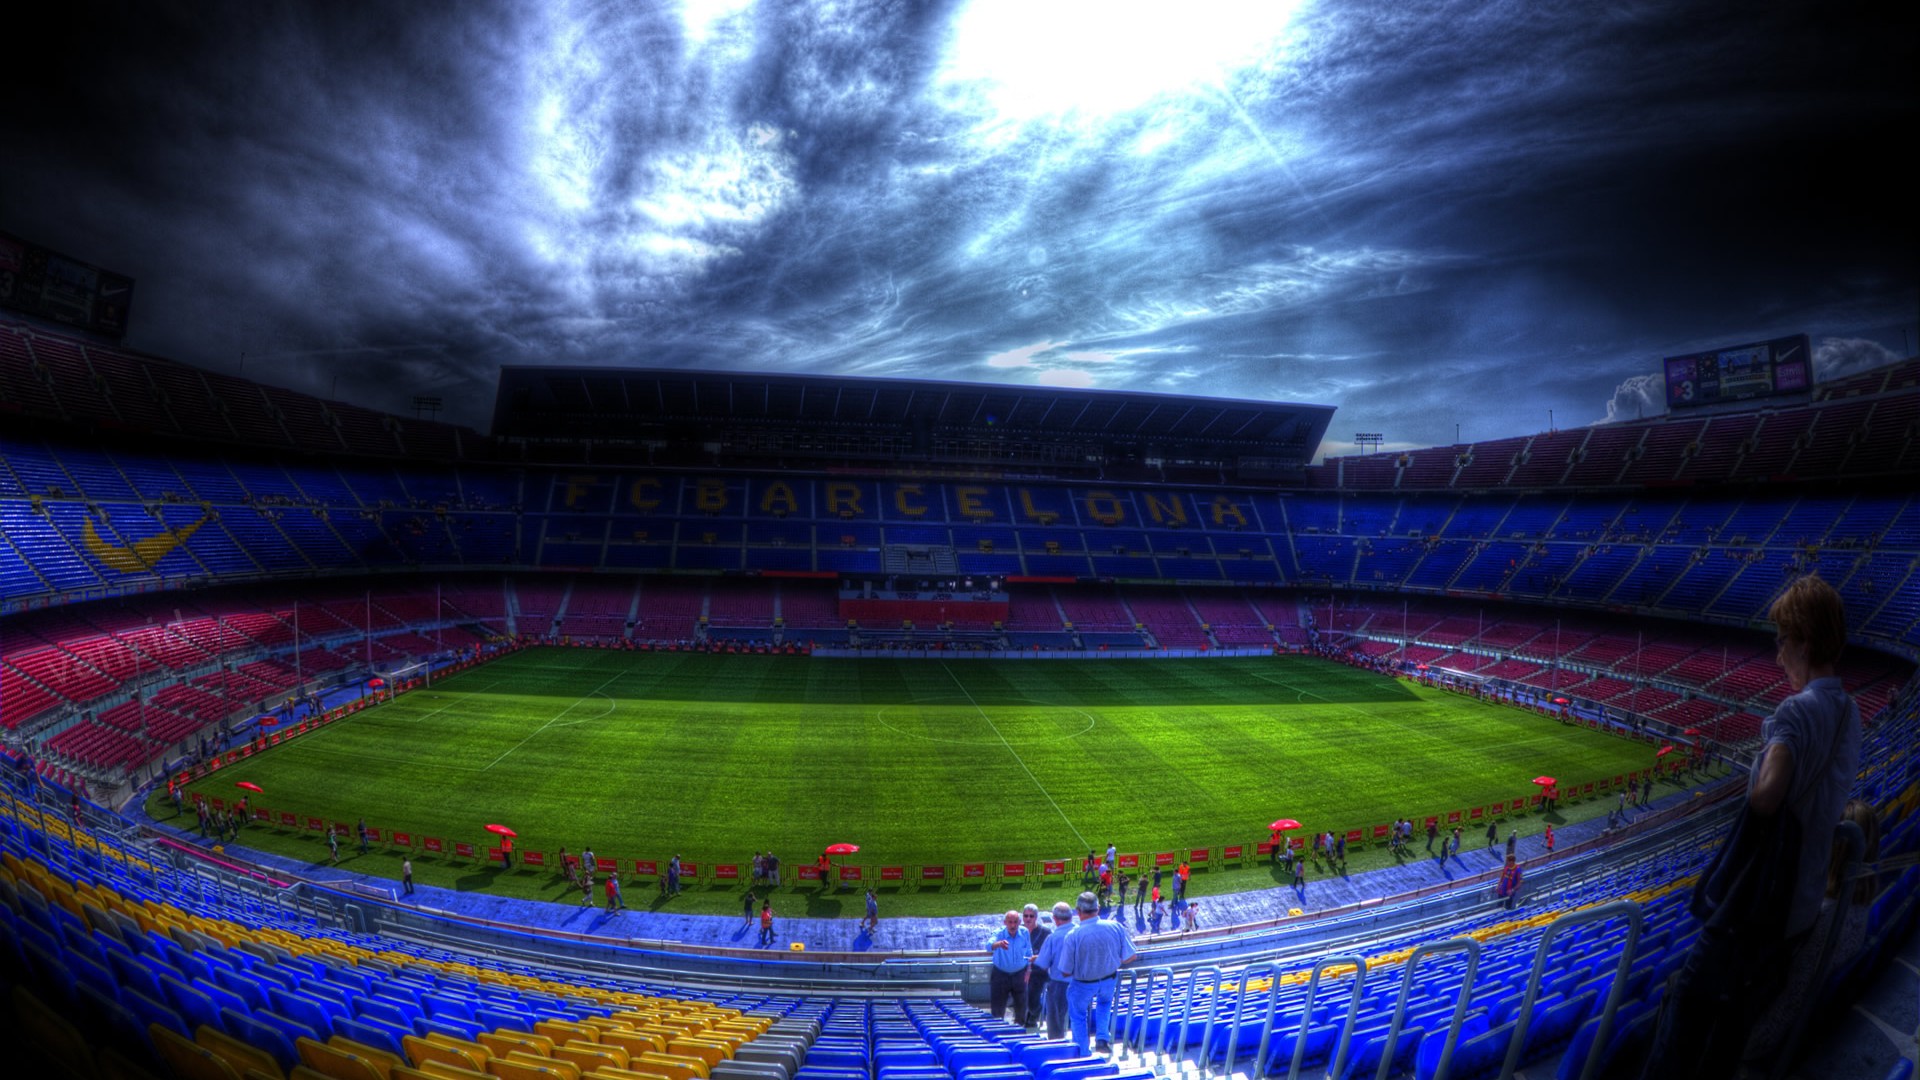 Barca Stadium Wallpapers